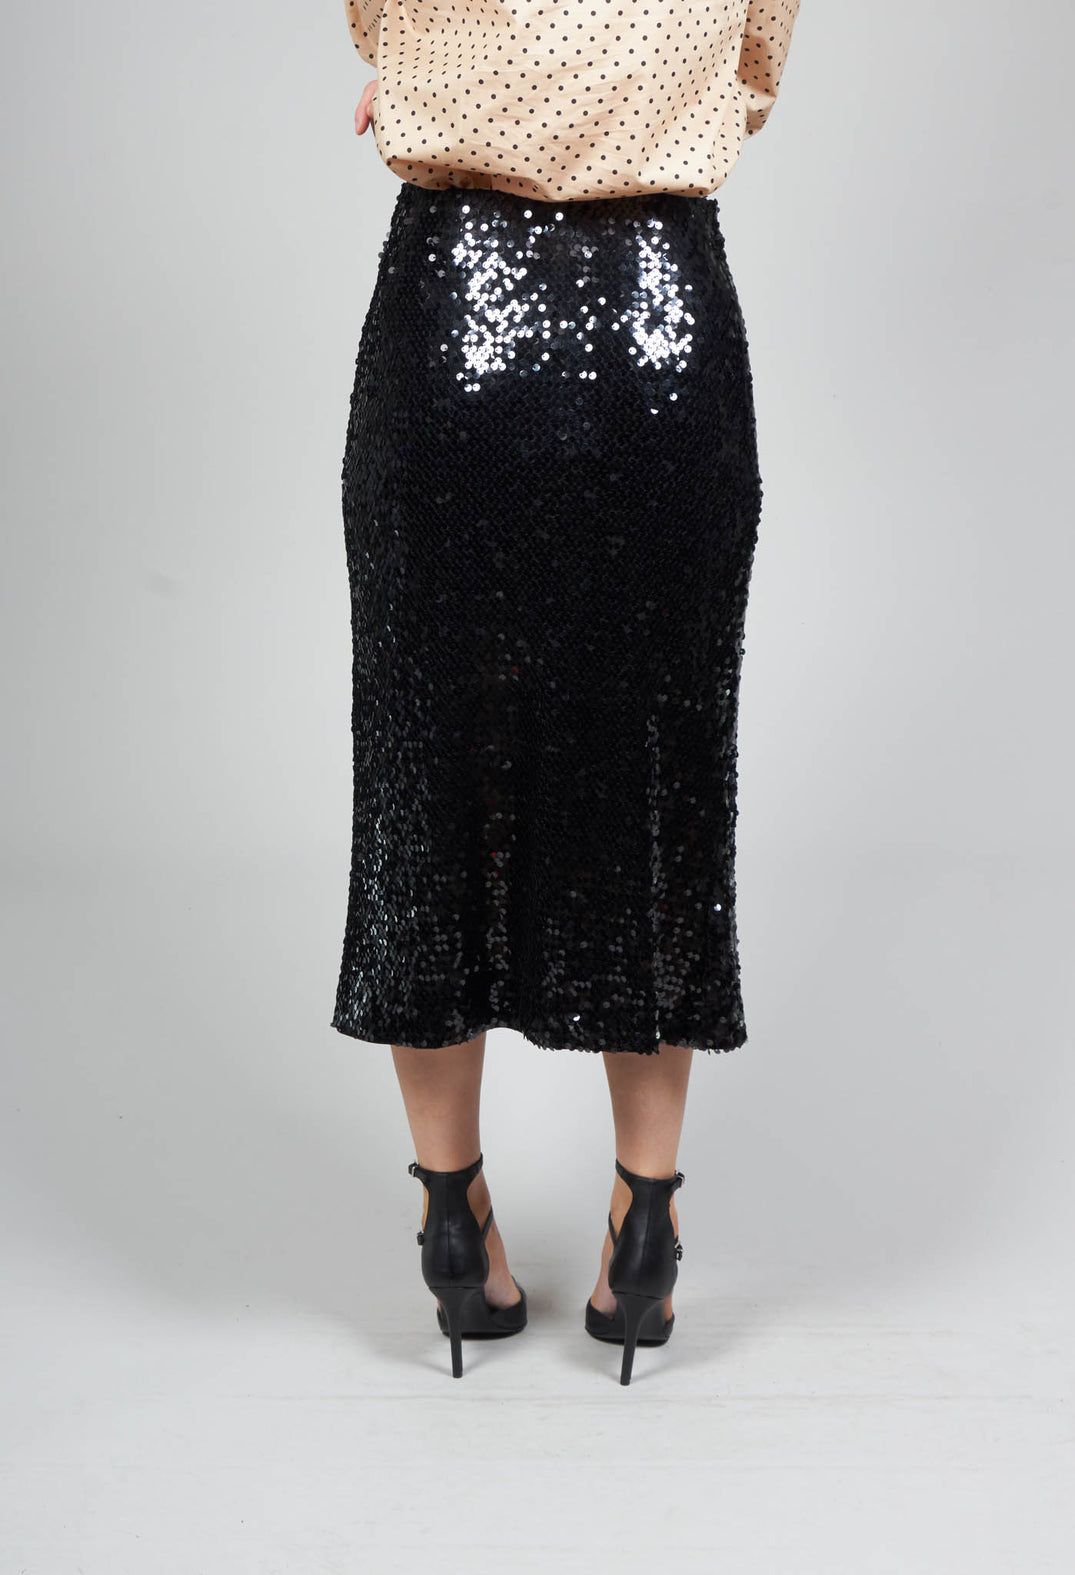 lady wearing black sequin skirt 